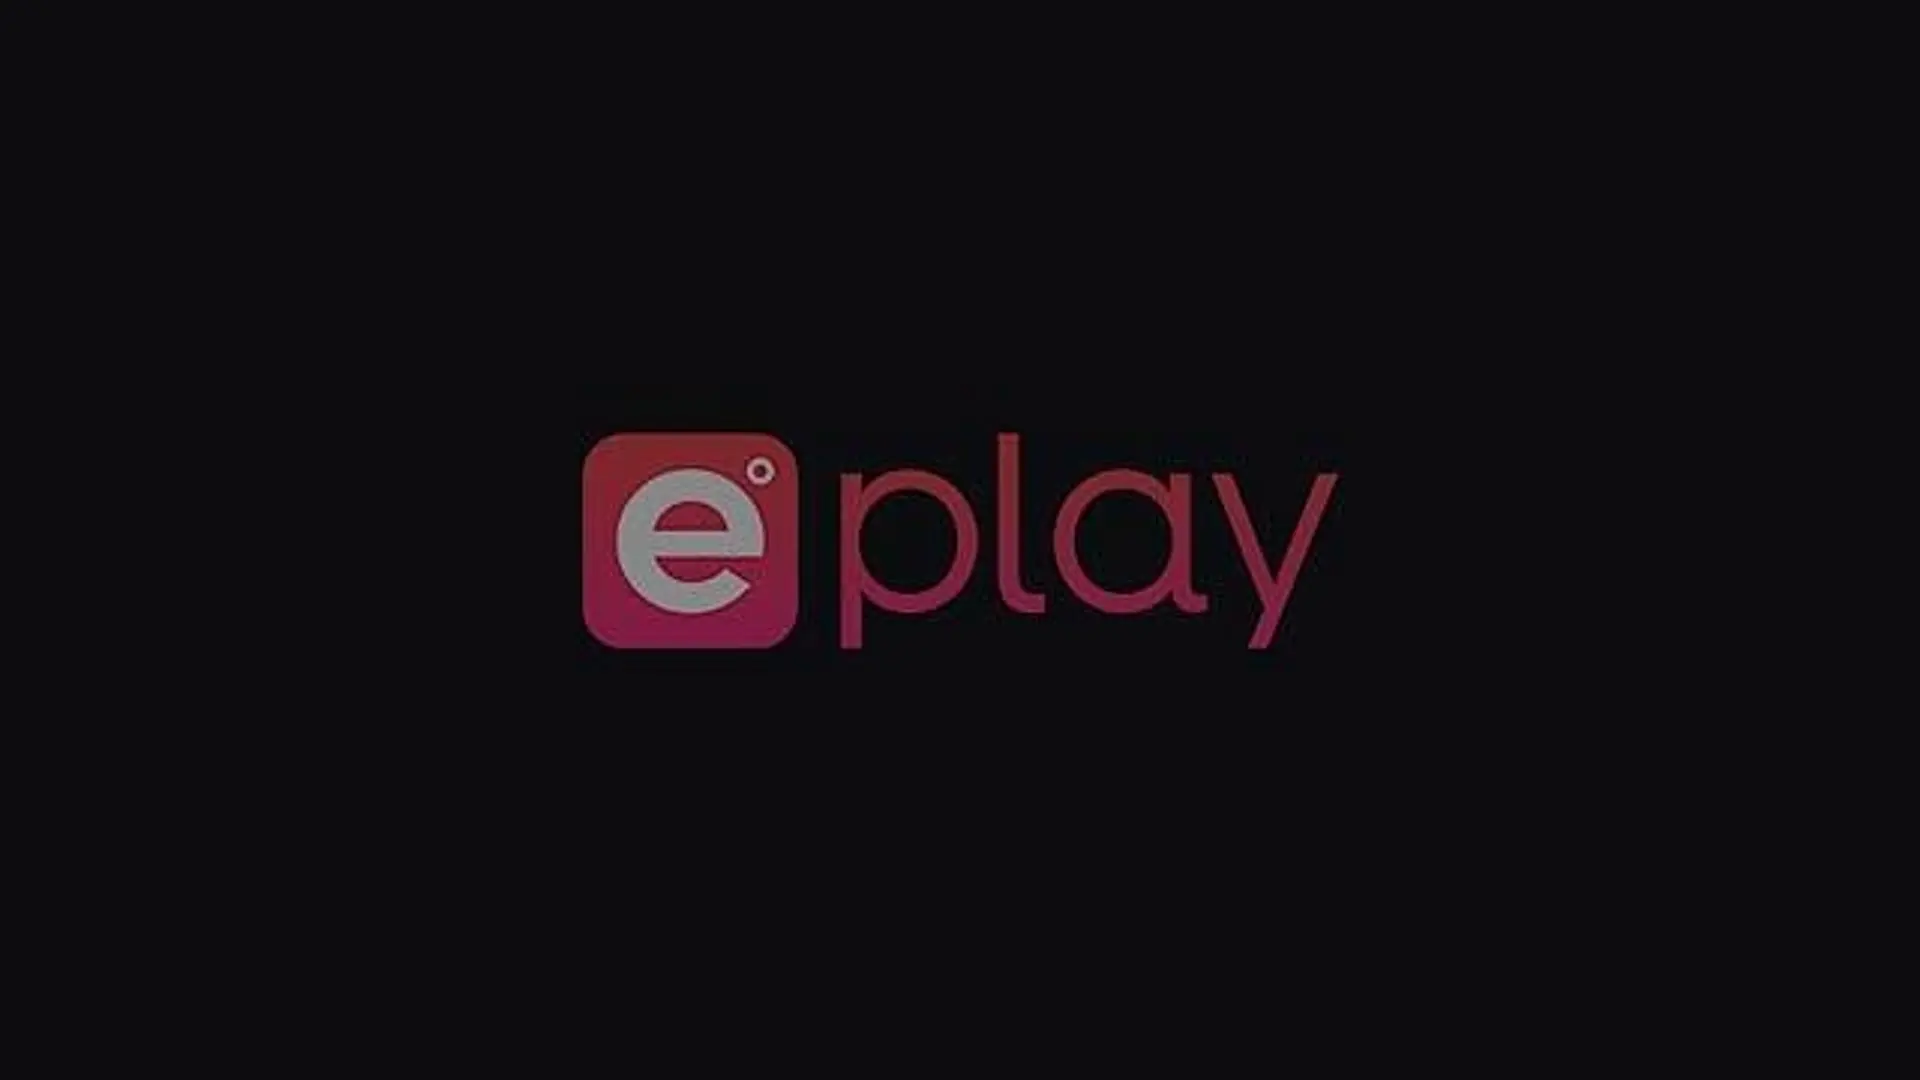 ChloeJewel's ePlay Channel